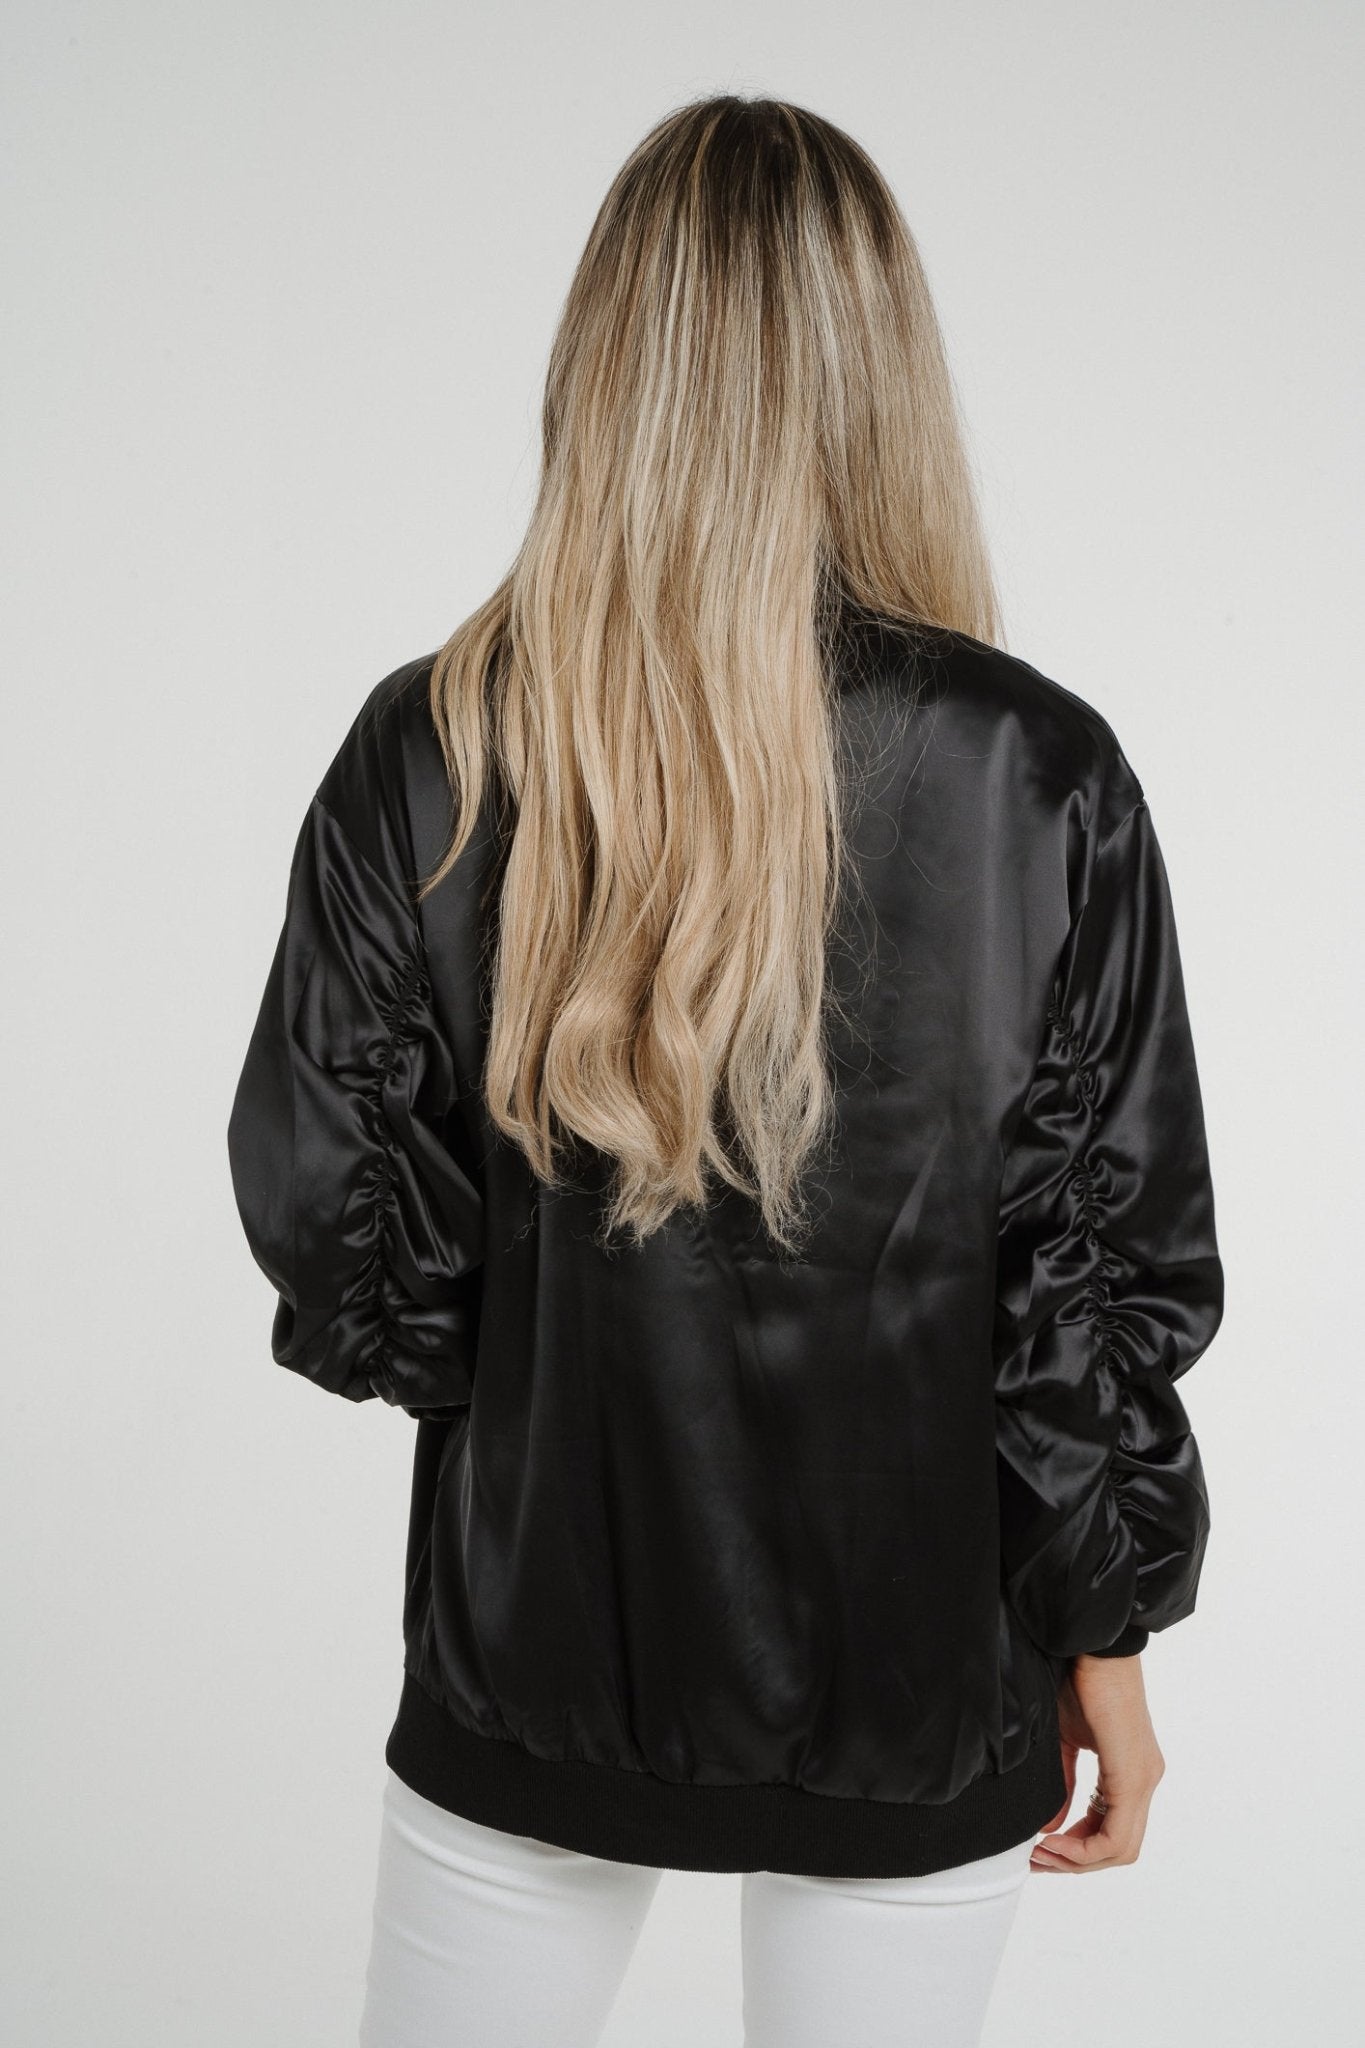 Ivy Zip Jacket In Black - The Walk in Wardrobe